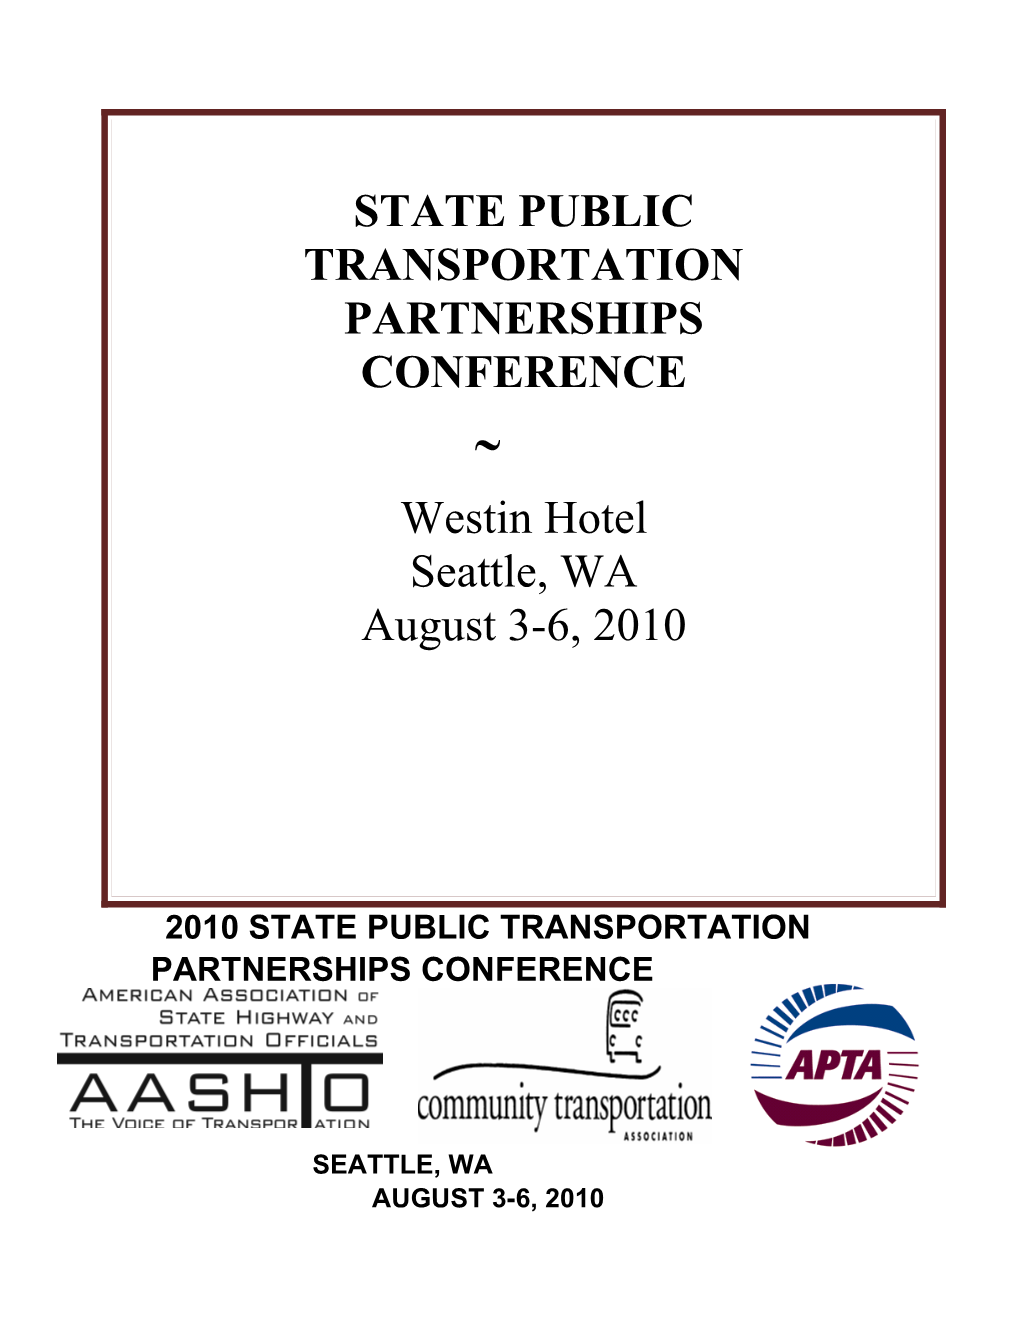 2010 State Public Transportation